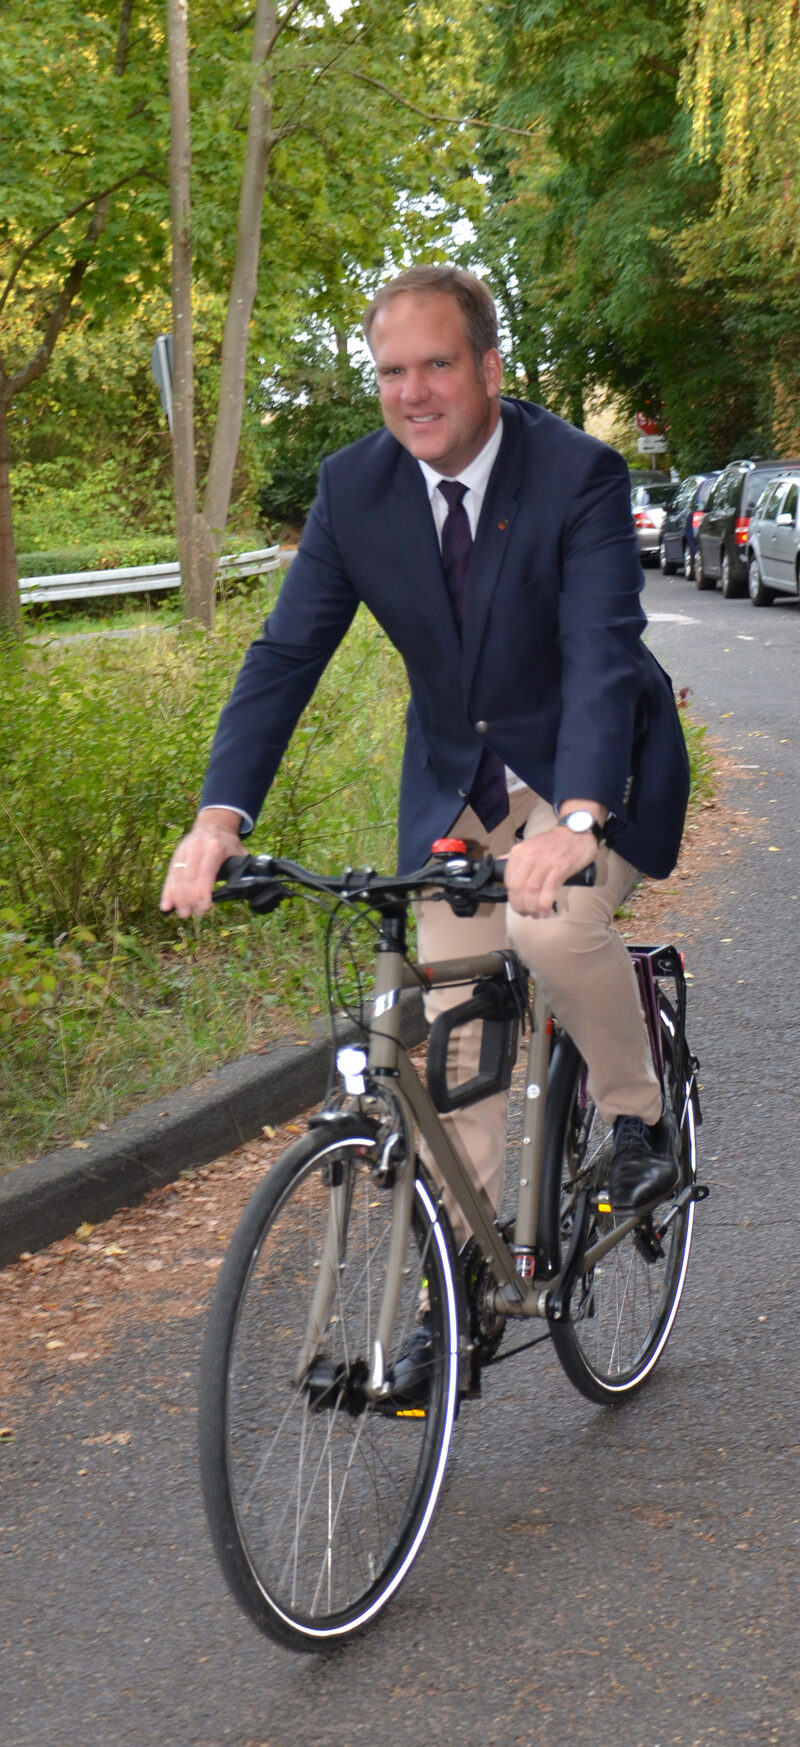 Bürgermeister Dirk Breuer auf dem Fahrrad.